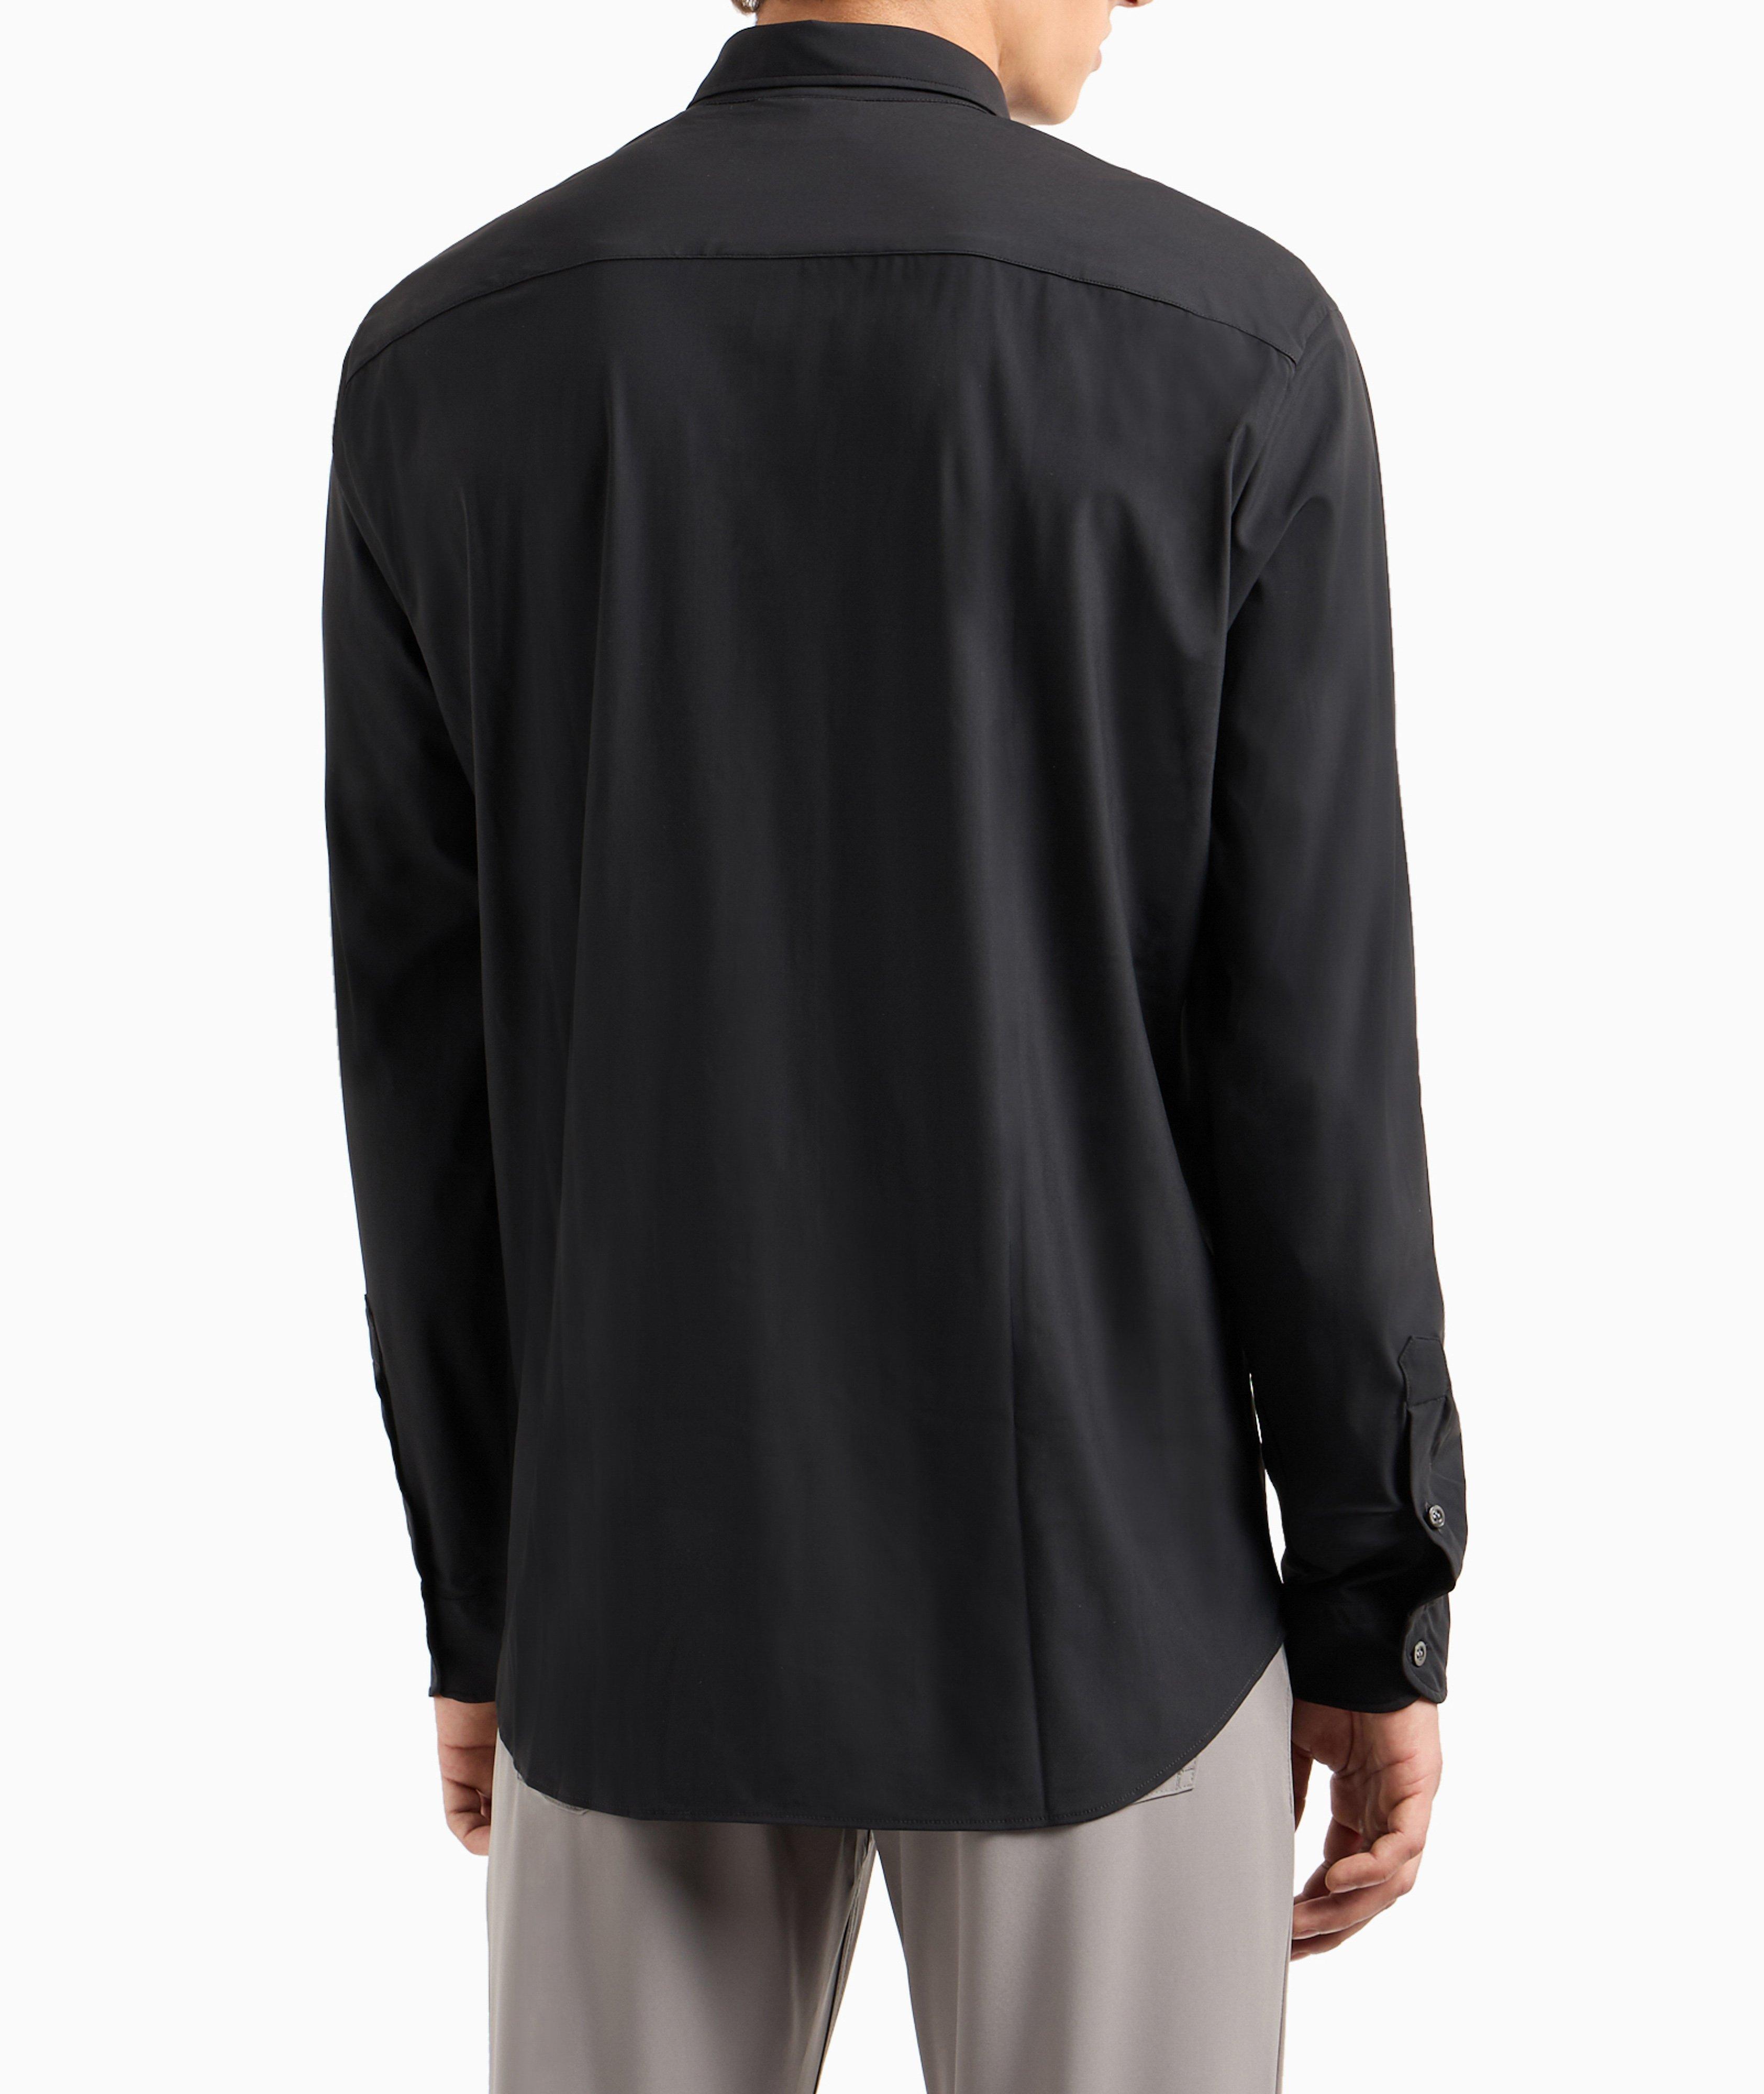 Windowpane Jacquard Cotton Sport Shirt